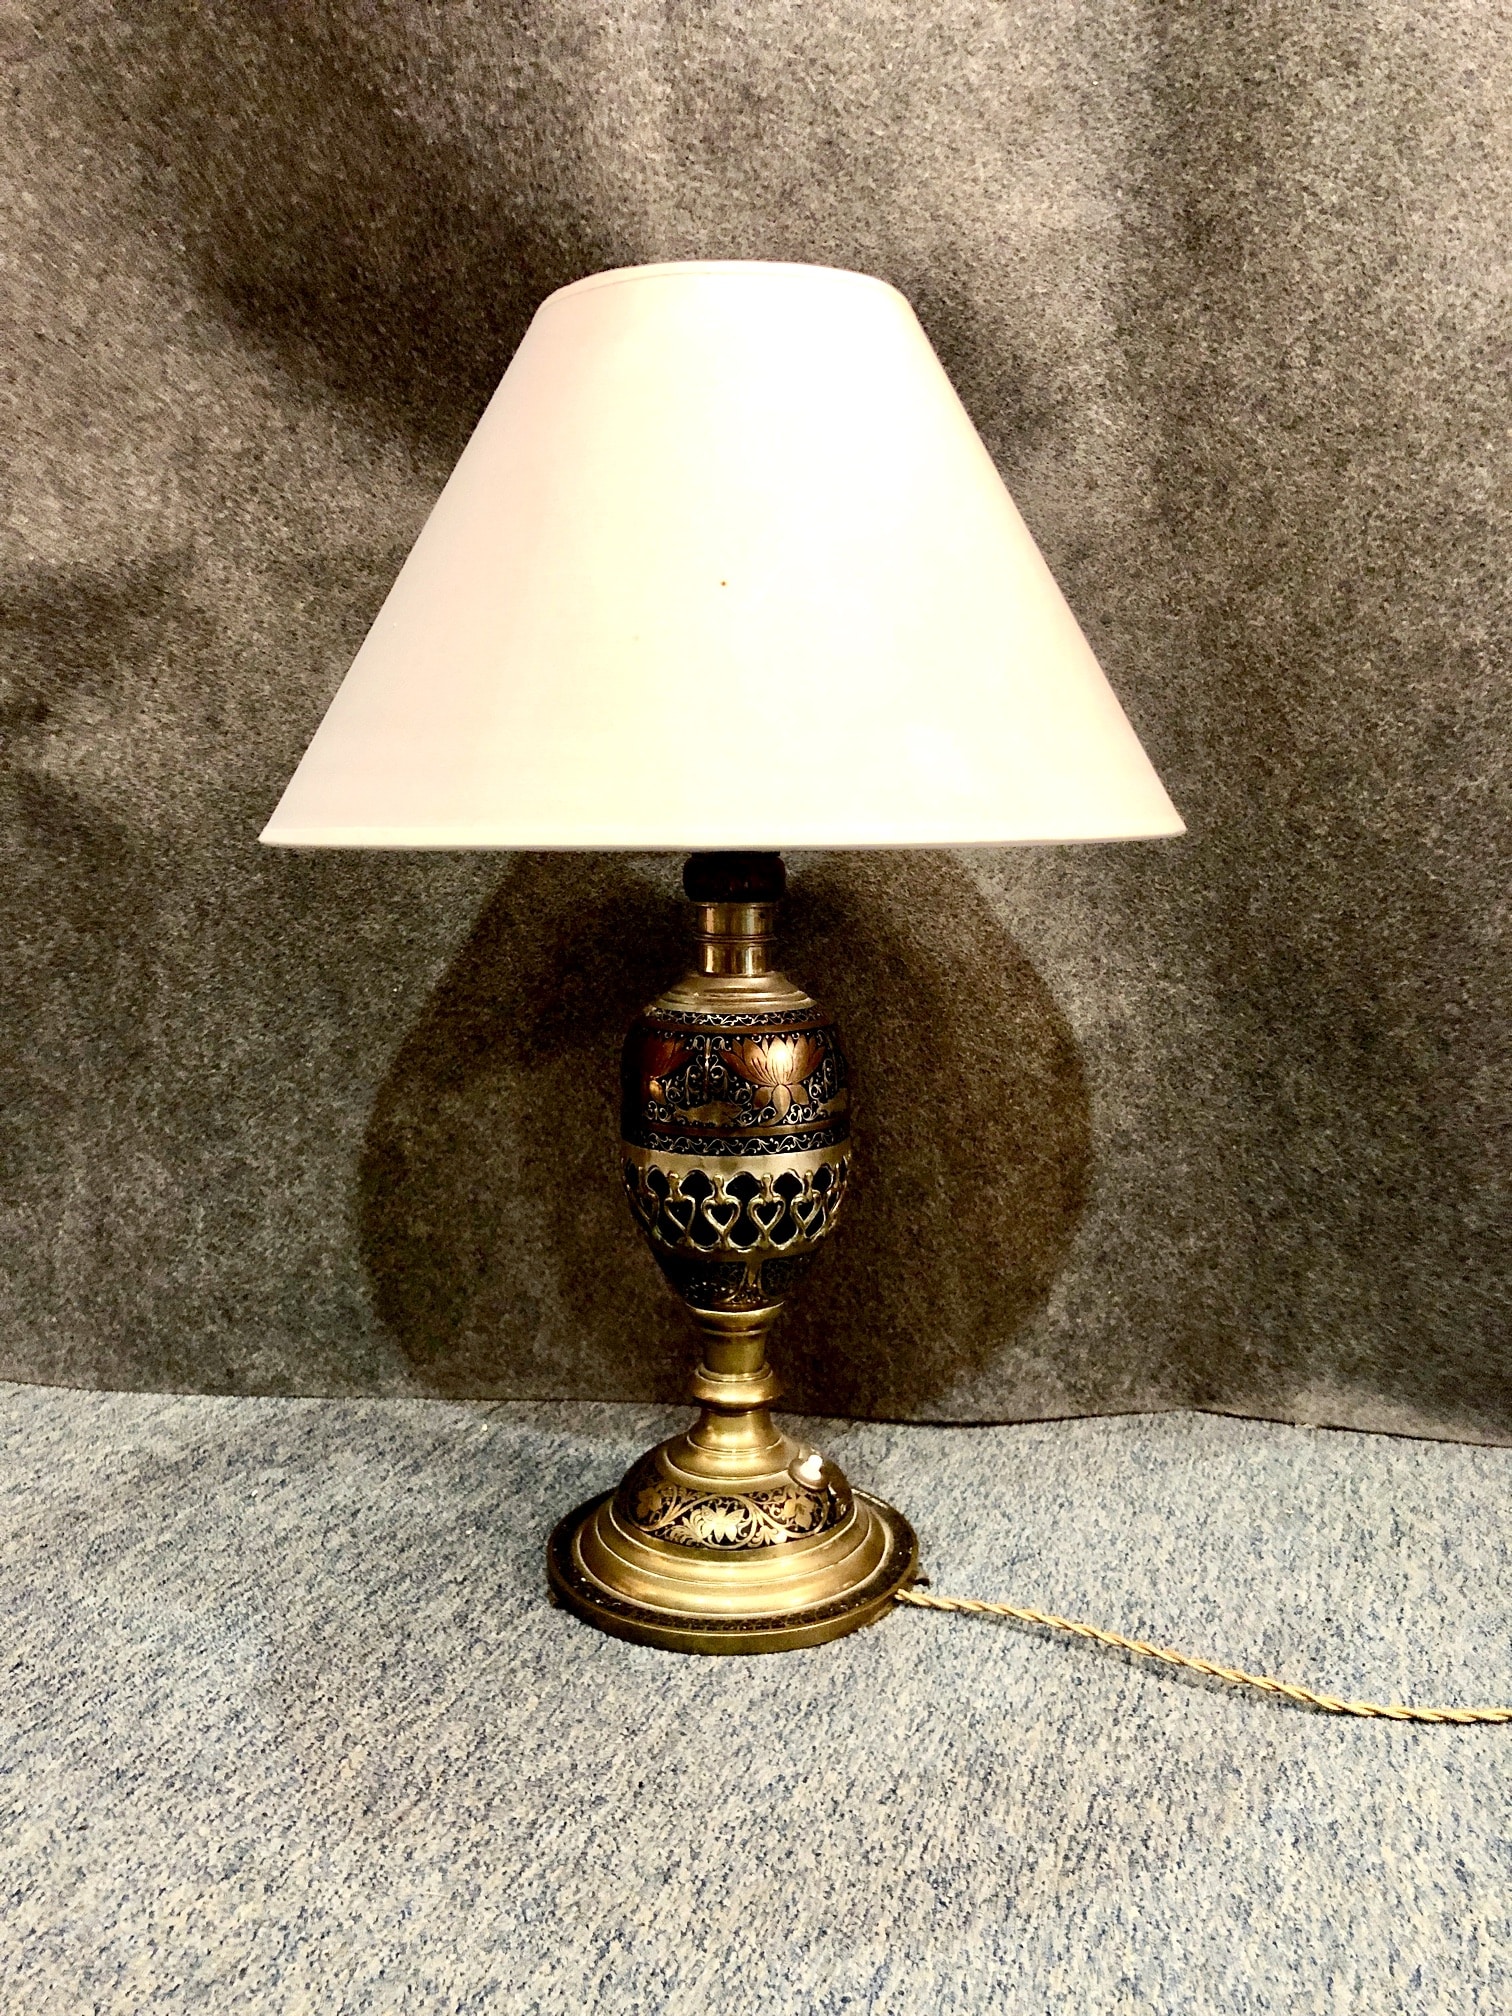 Lampe orientaliste, XIXe siècle